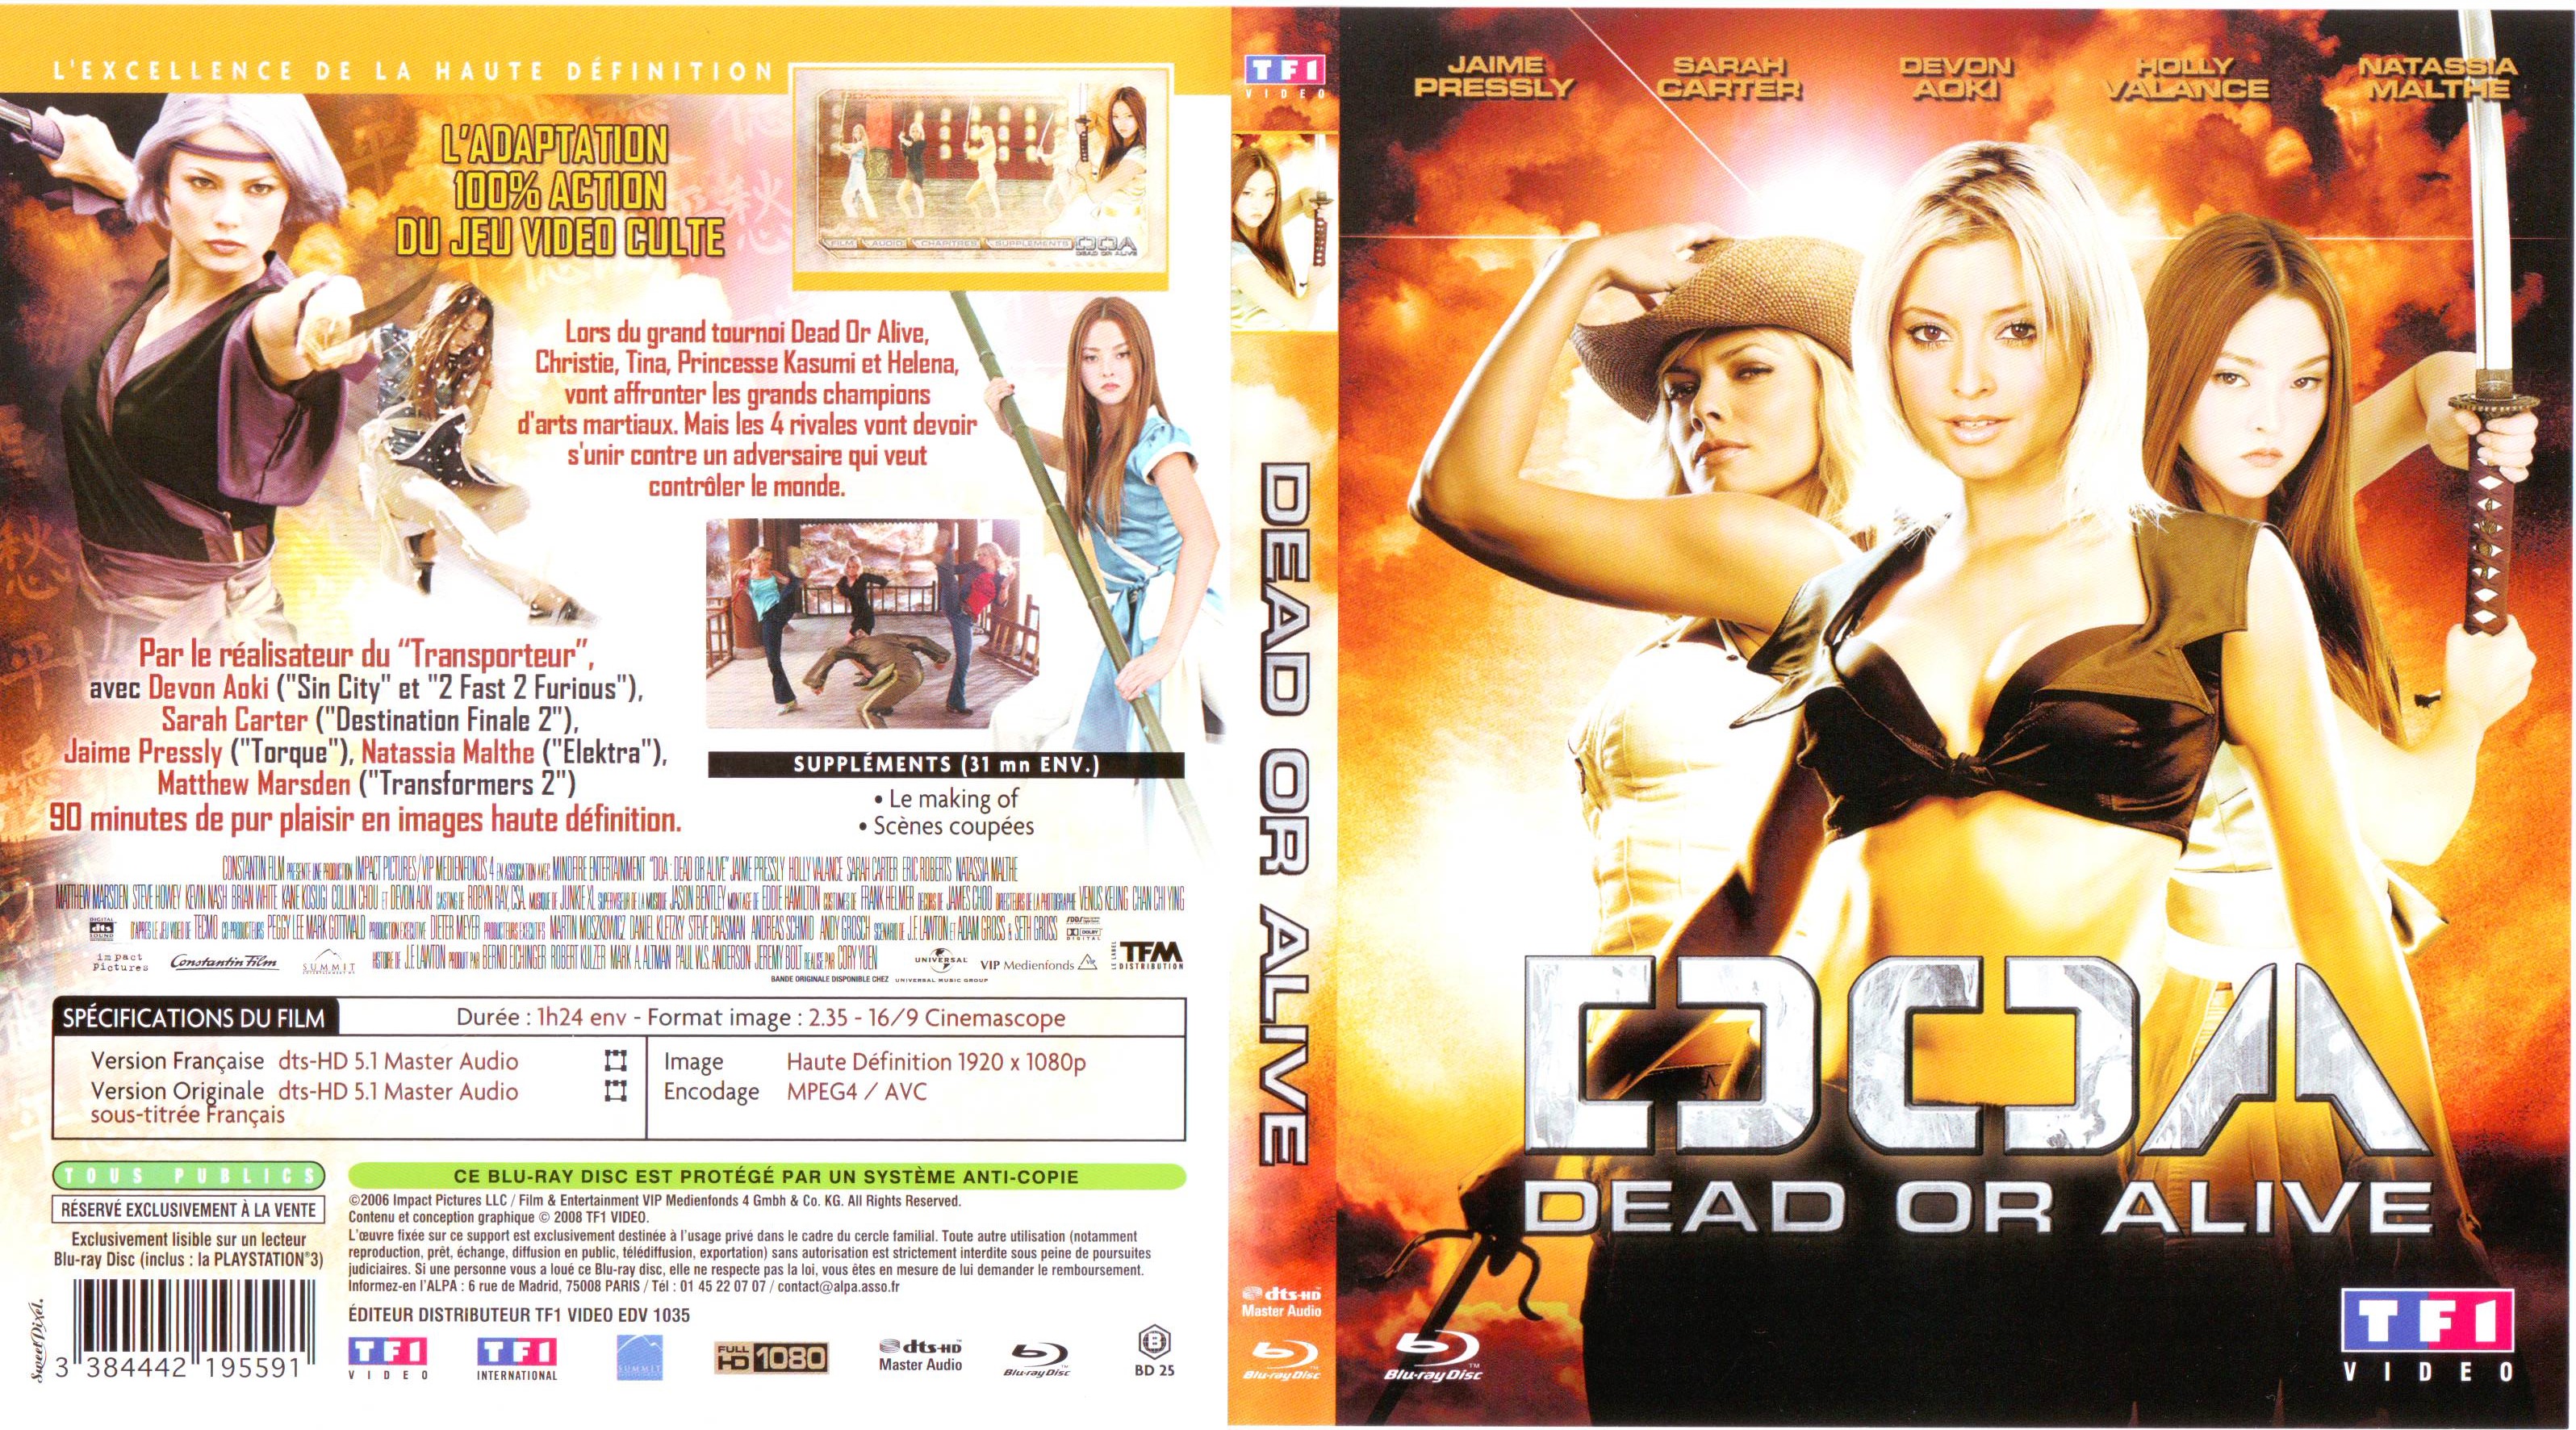 Jaquette DVD Dead or alive (2007) (BLU-RAY) v2